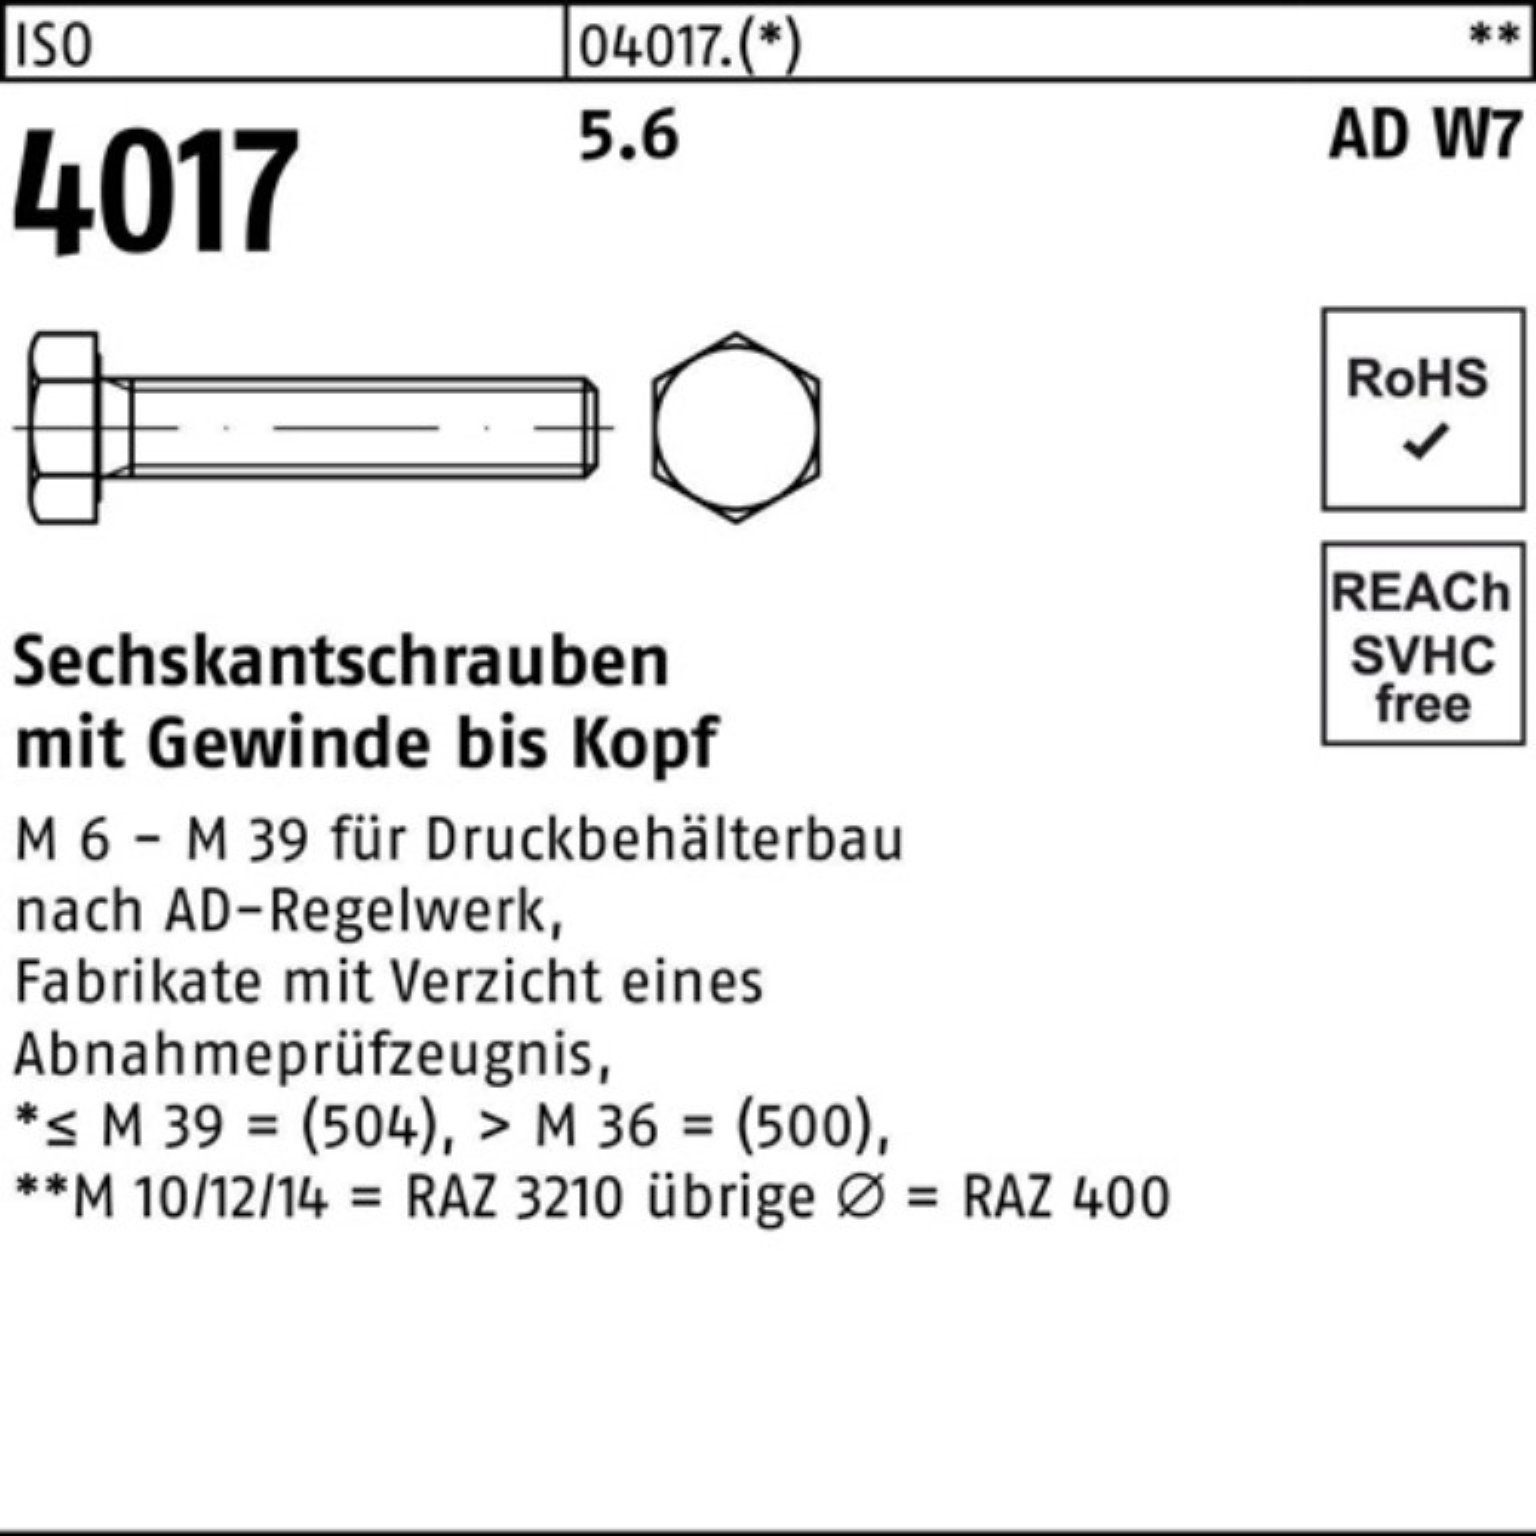 Bufab Sechskantschraube 200er Pack 200 Sechskantschraube 5.6 AD 4017 ISO 16 Stück W7 VG M10x